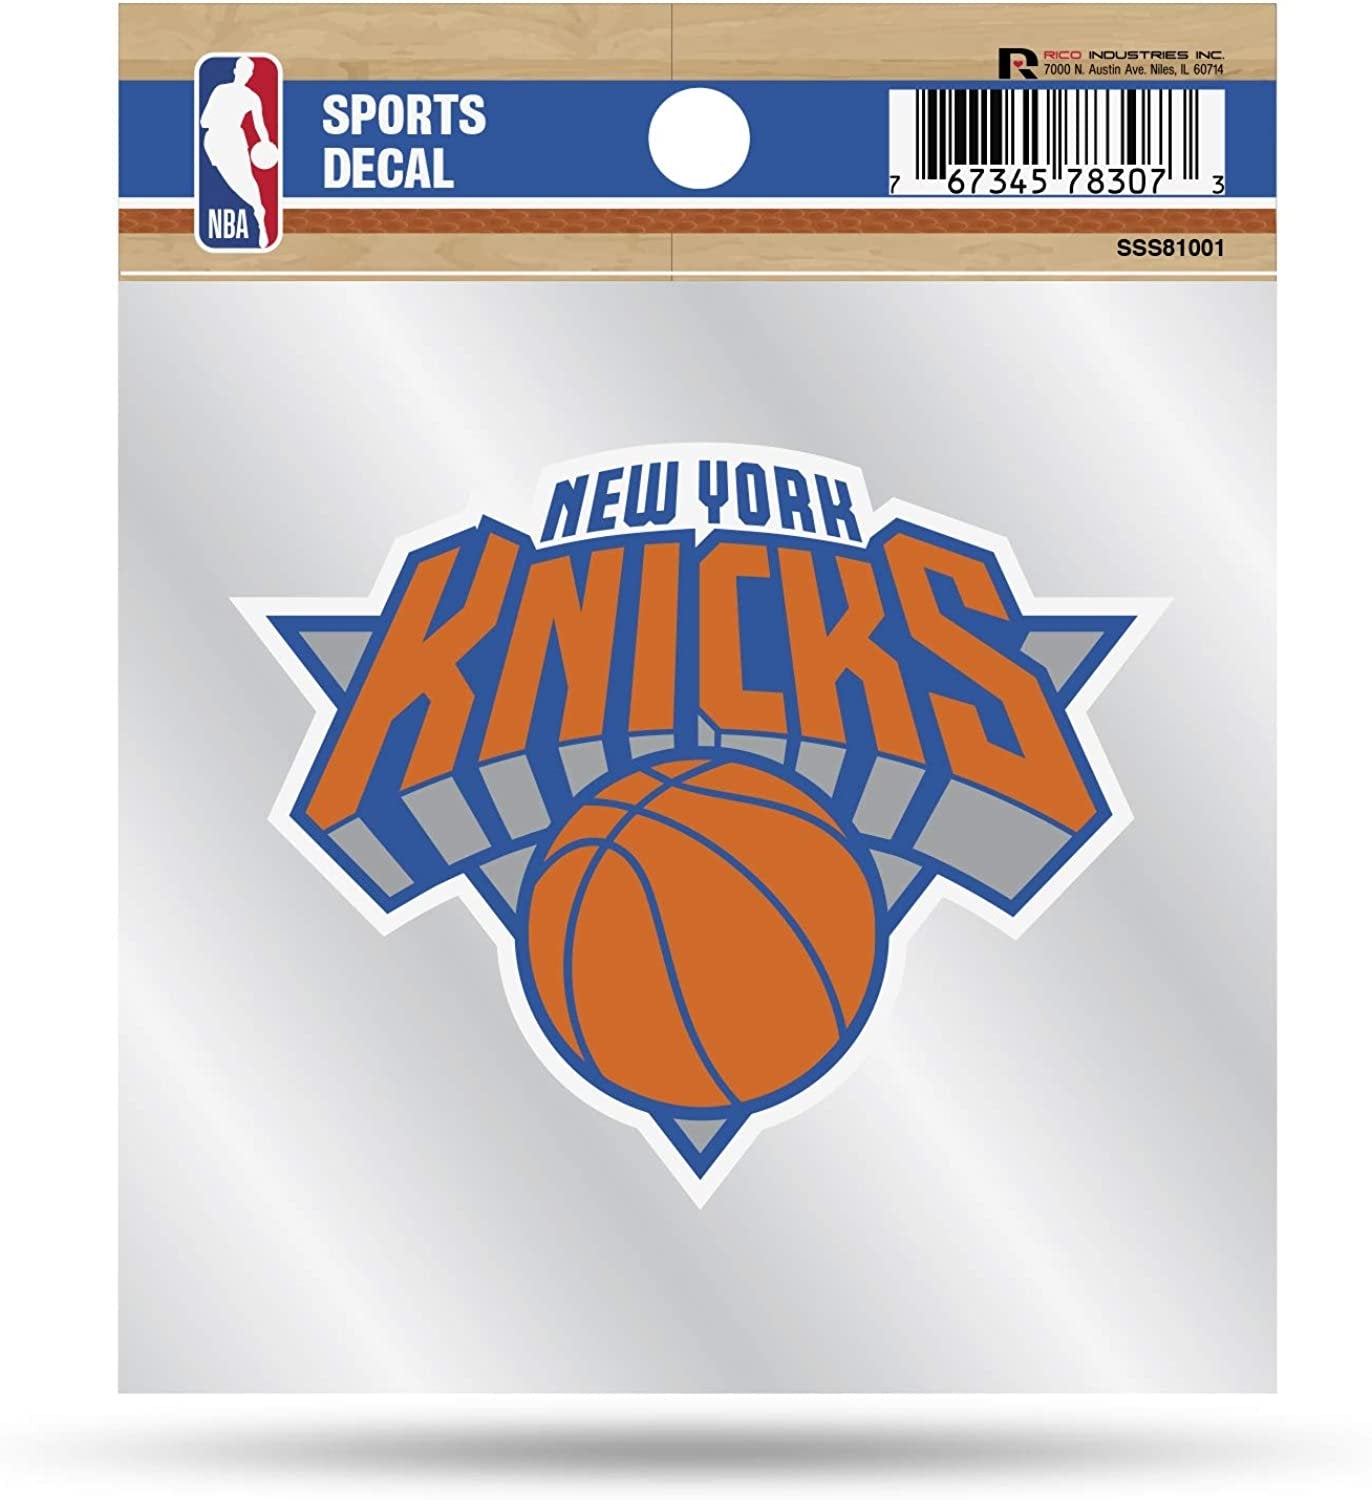 New York Knicks 4x4 Inch Die Cut Decal Sticker, Primary Logo, Clear Backing